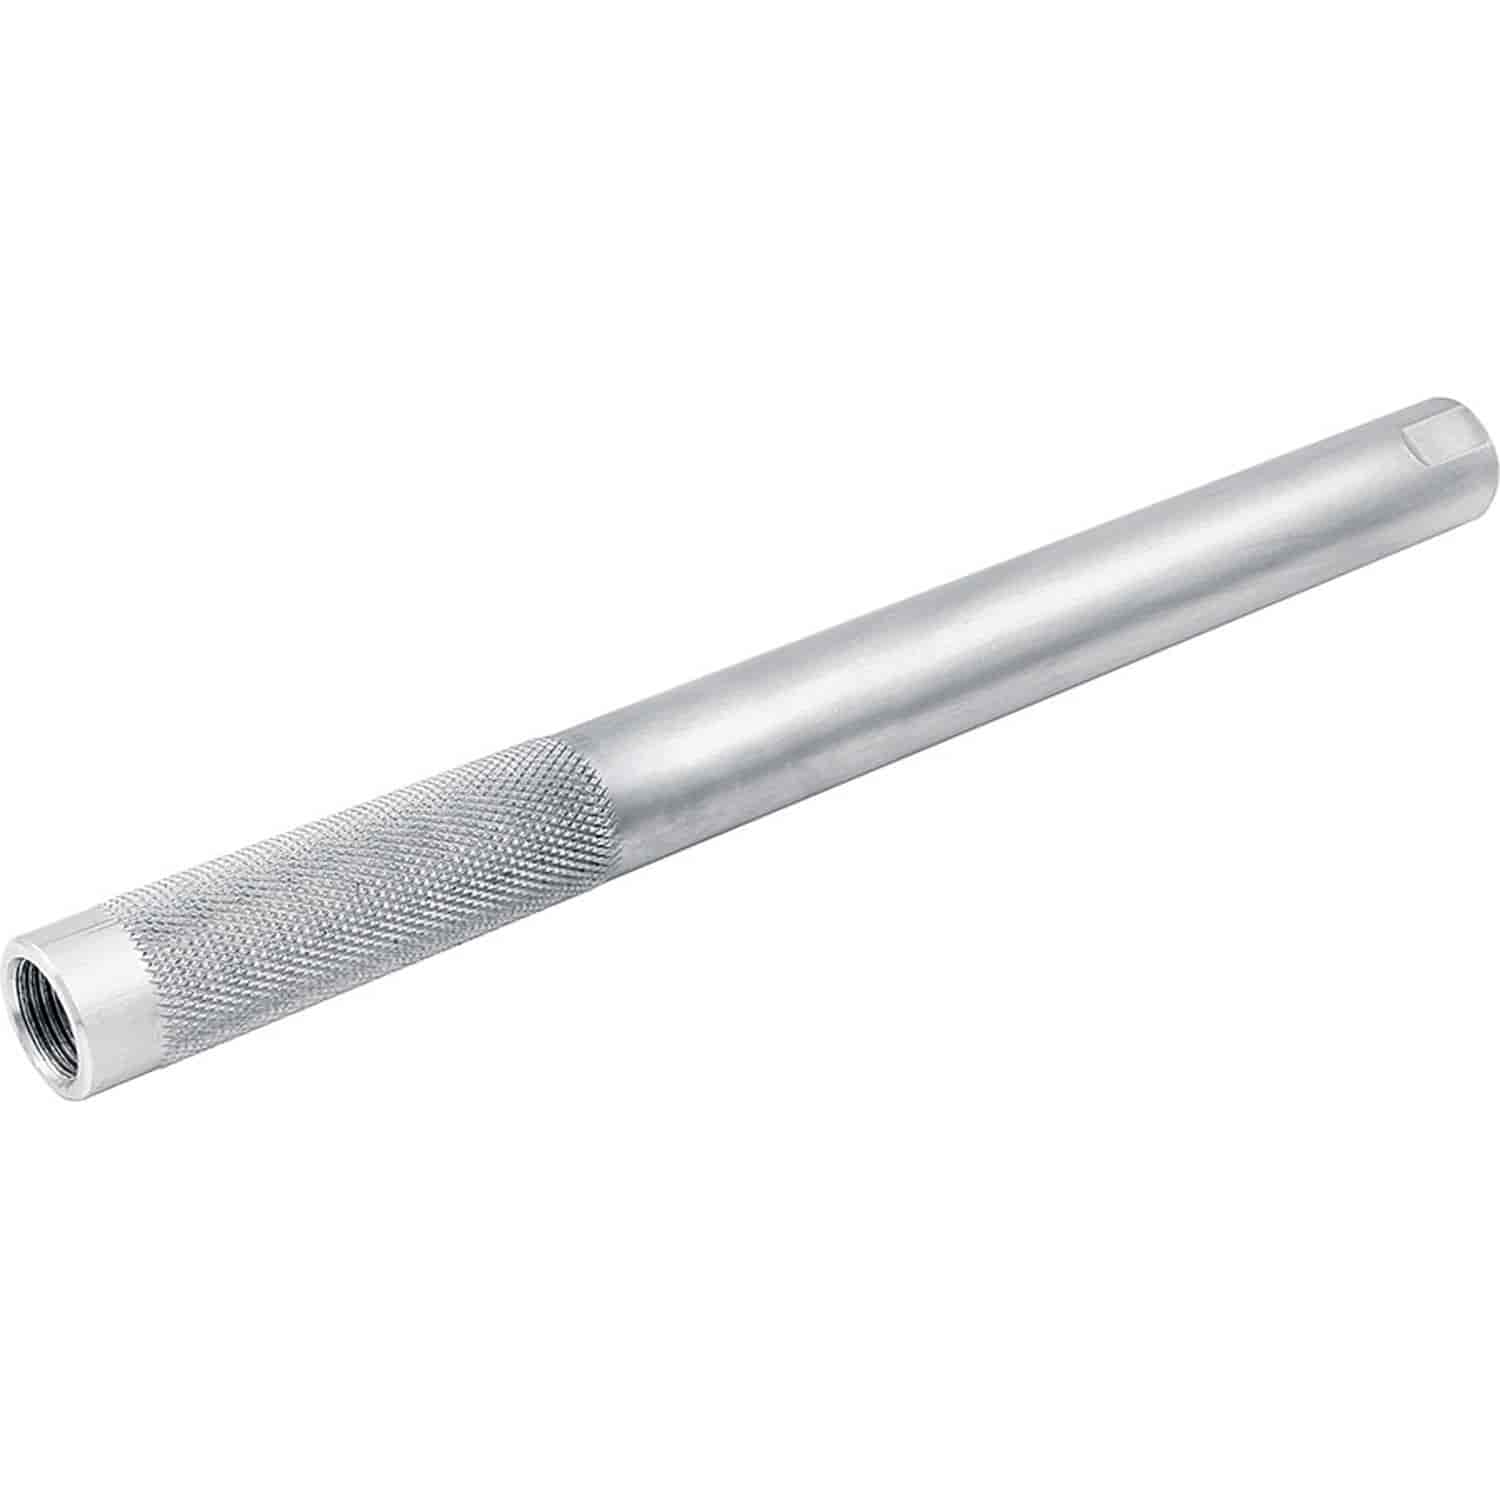 Swedged Aluminum Tie Rod Tube Length: 18